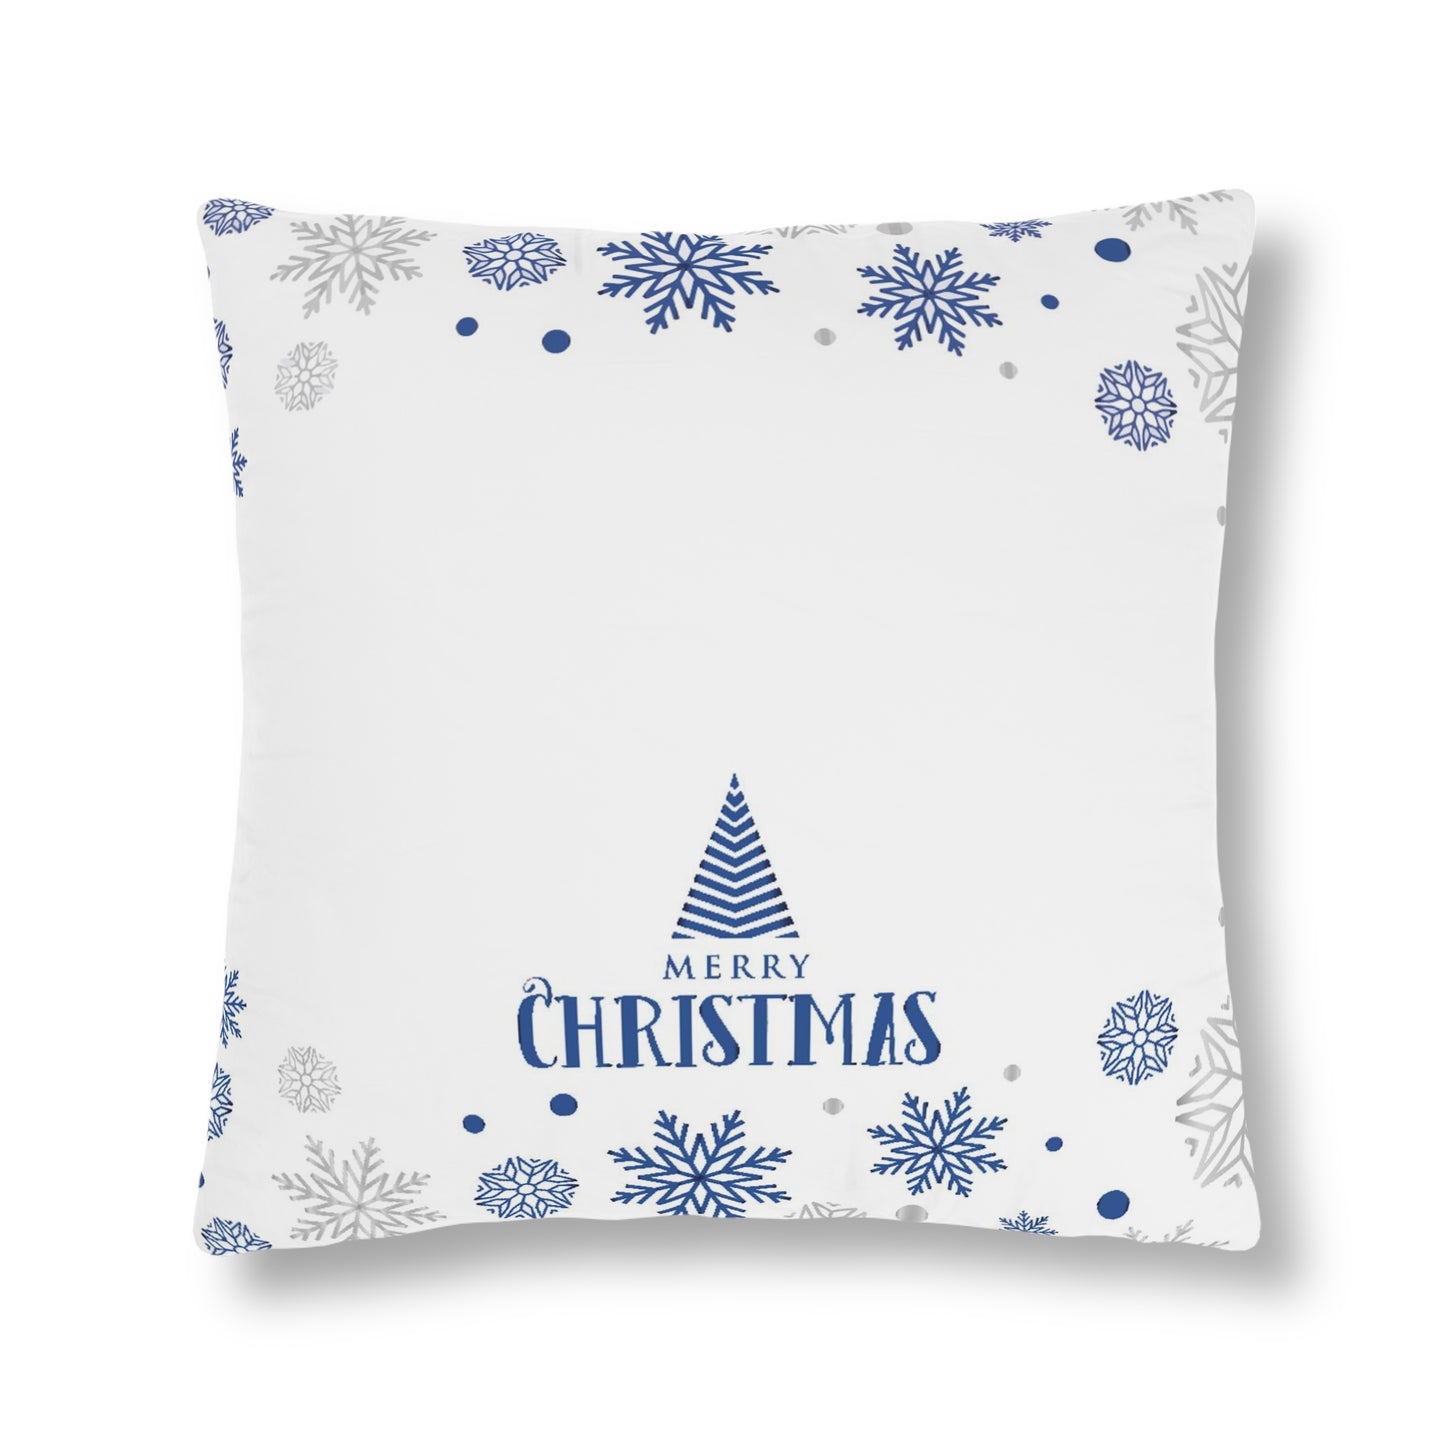 White Christmas Waterproof Pillows